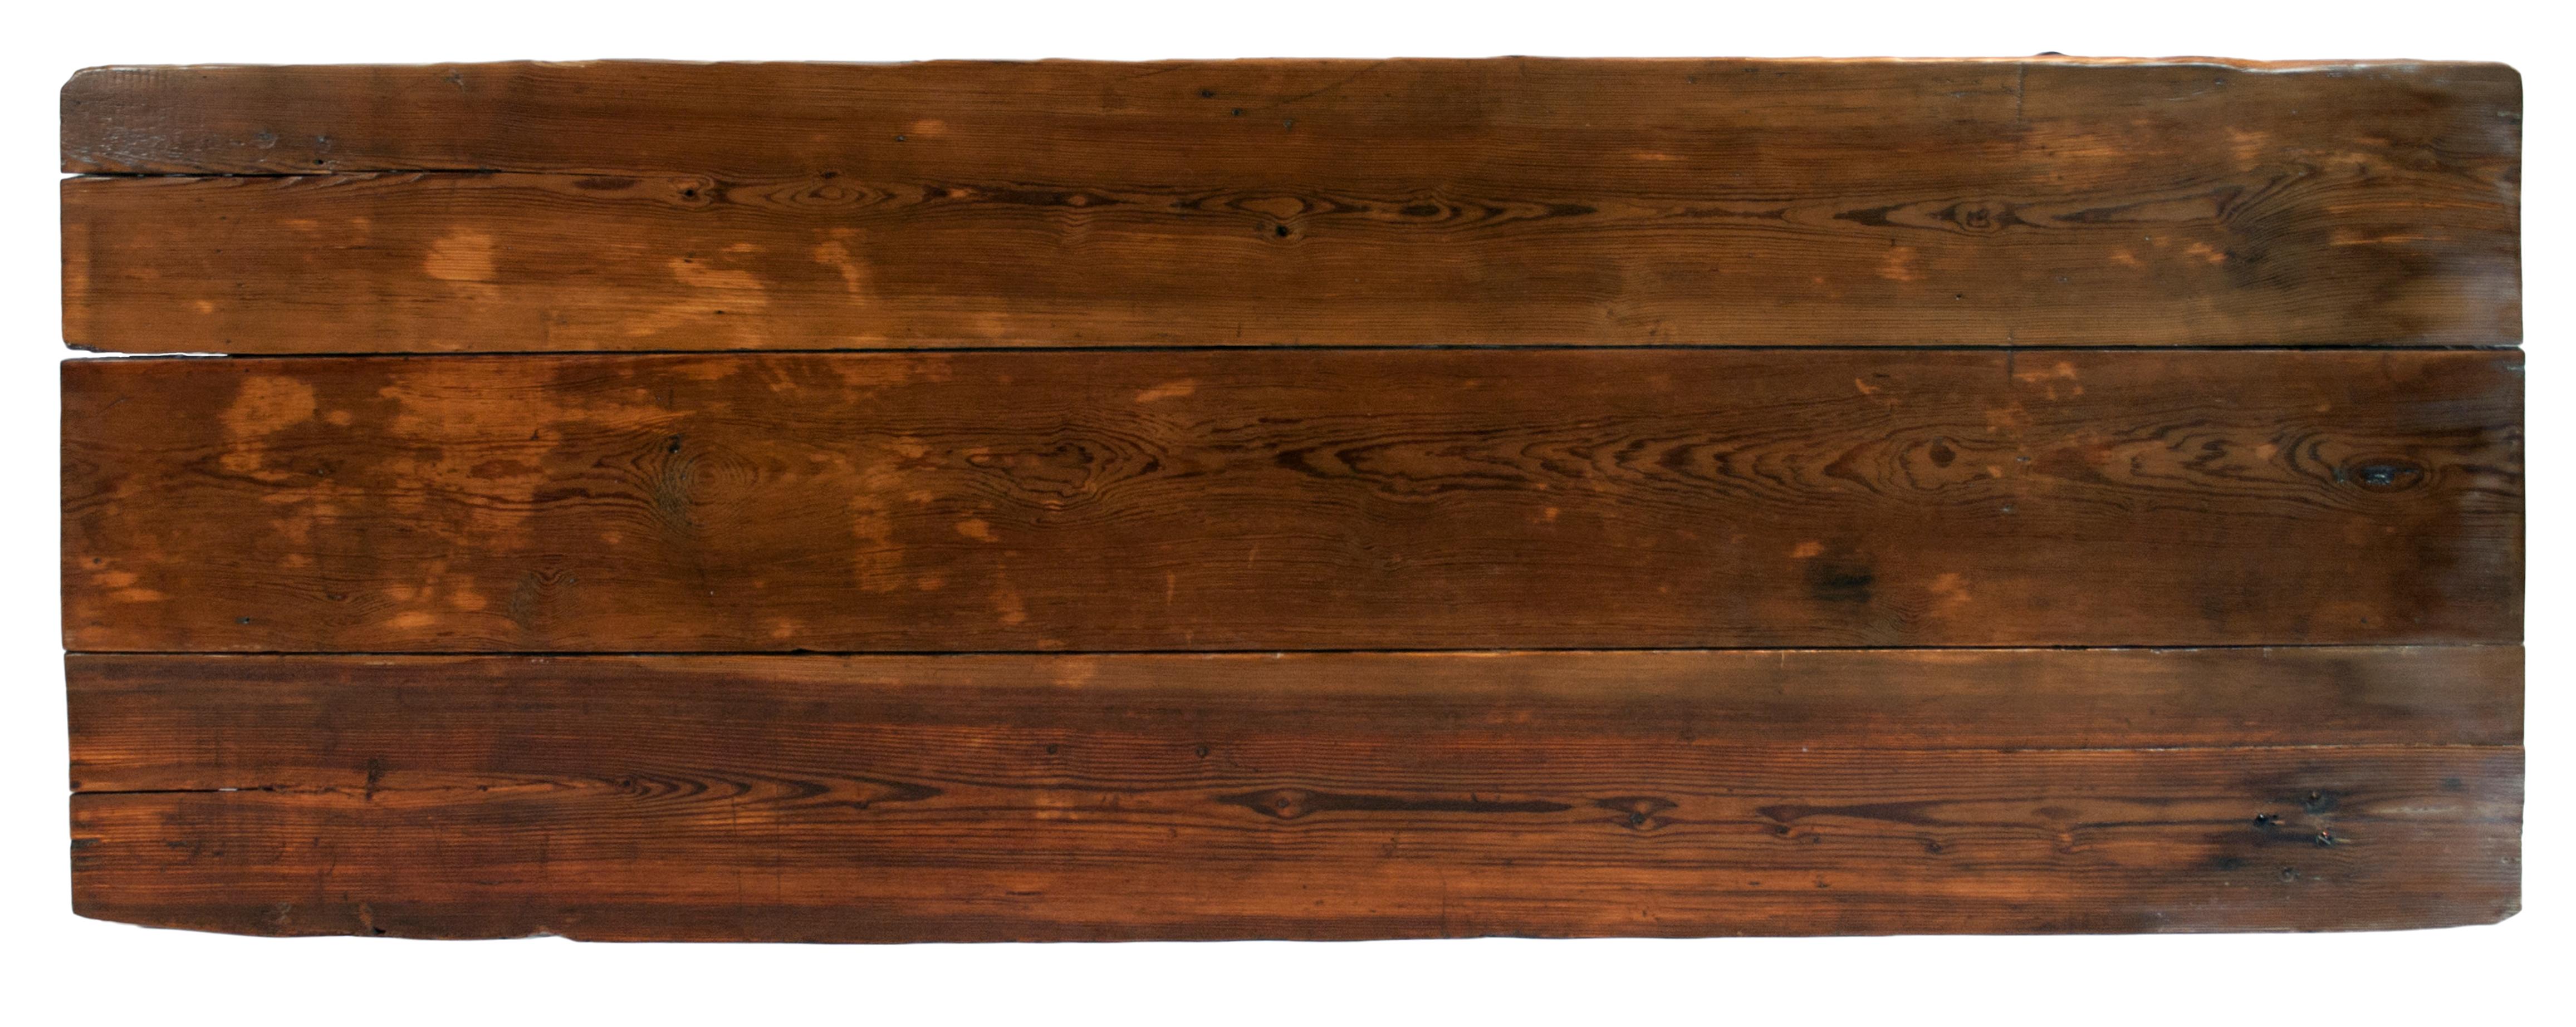 20th Century Vintage Reclaimed Wood Plank Table on Industrial Metal Legs